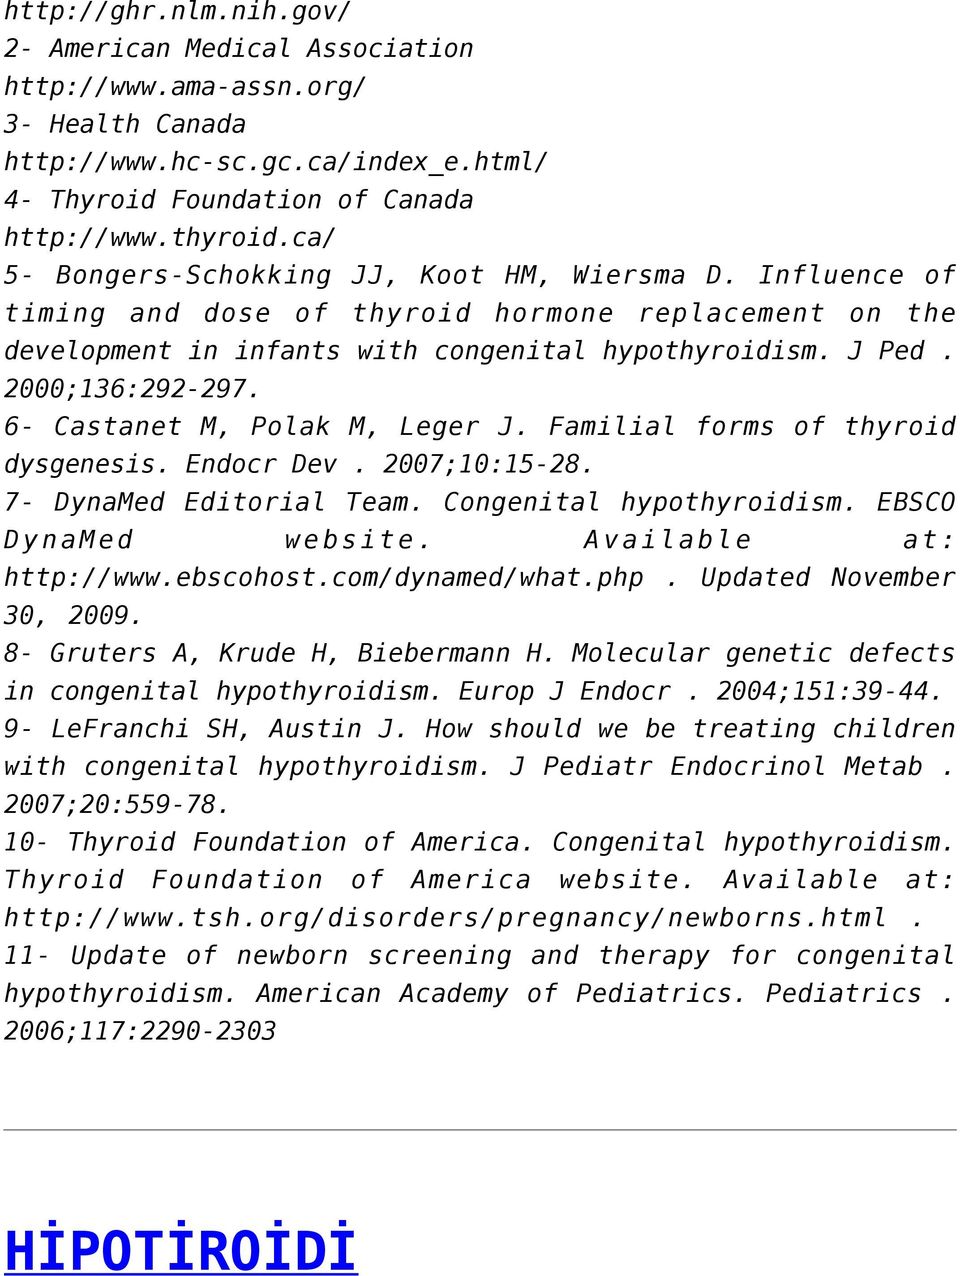 6- Castanet M, Polak M, Leger J. Familial forms of thyroid dysgenesis. Endocr Dev. 2007;10:15-28. 7- DynaMed Editorial Team. Congenital hypothyroidism. EBSCO DynaMed website. Available at: http://www.